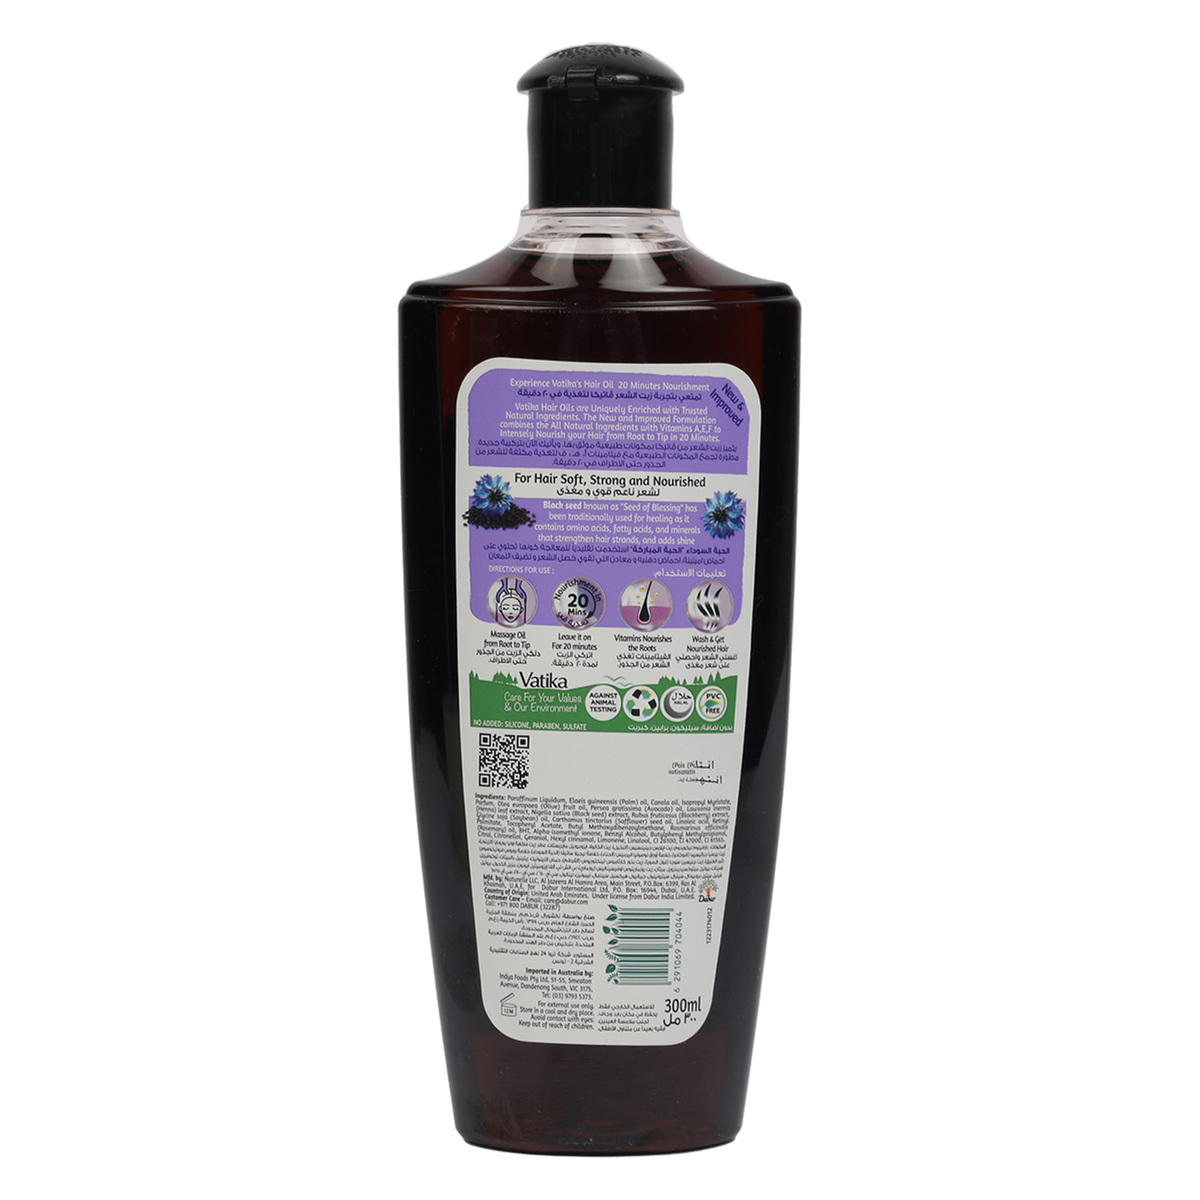 Dabur Vatika Black Seed Hair Oil   300 ml